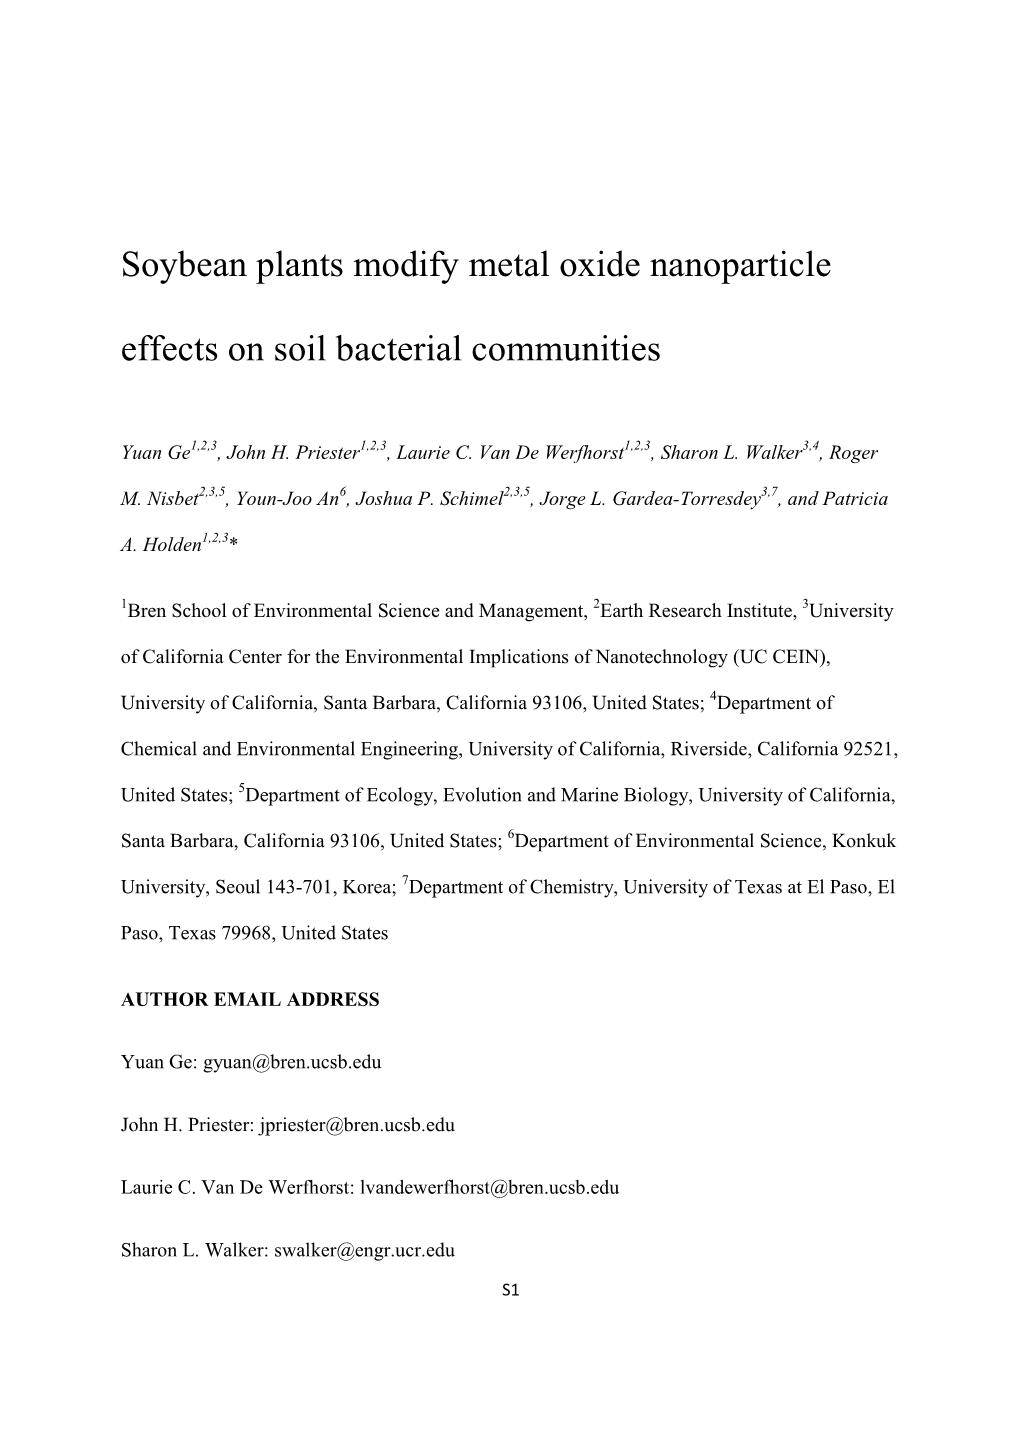 Soybean Plants Modify Metal Oxide Nanoparticle Effects on Soil Bacterial Communities